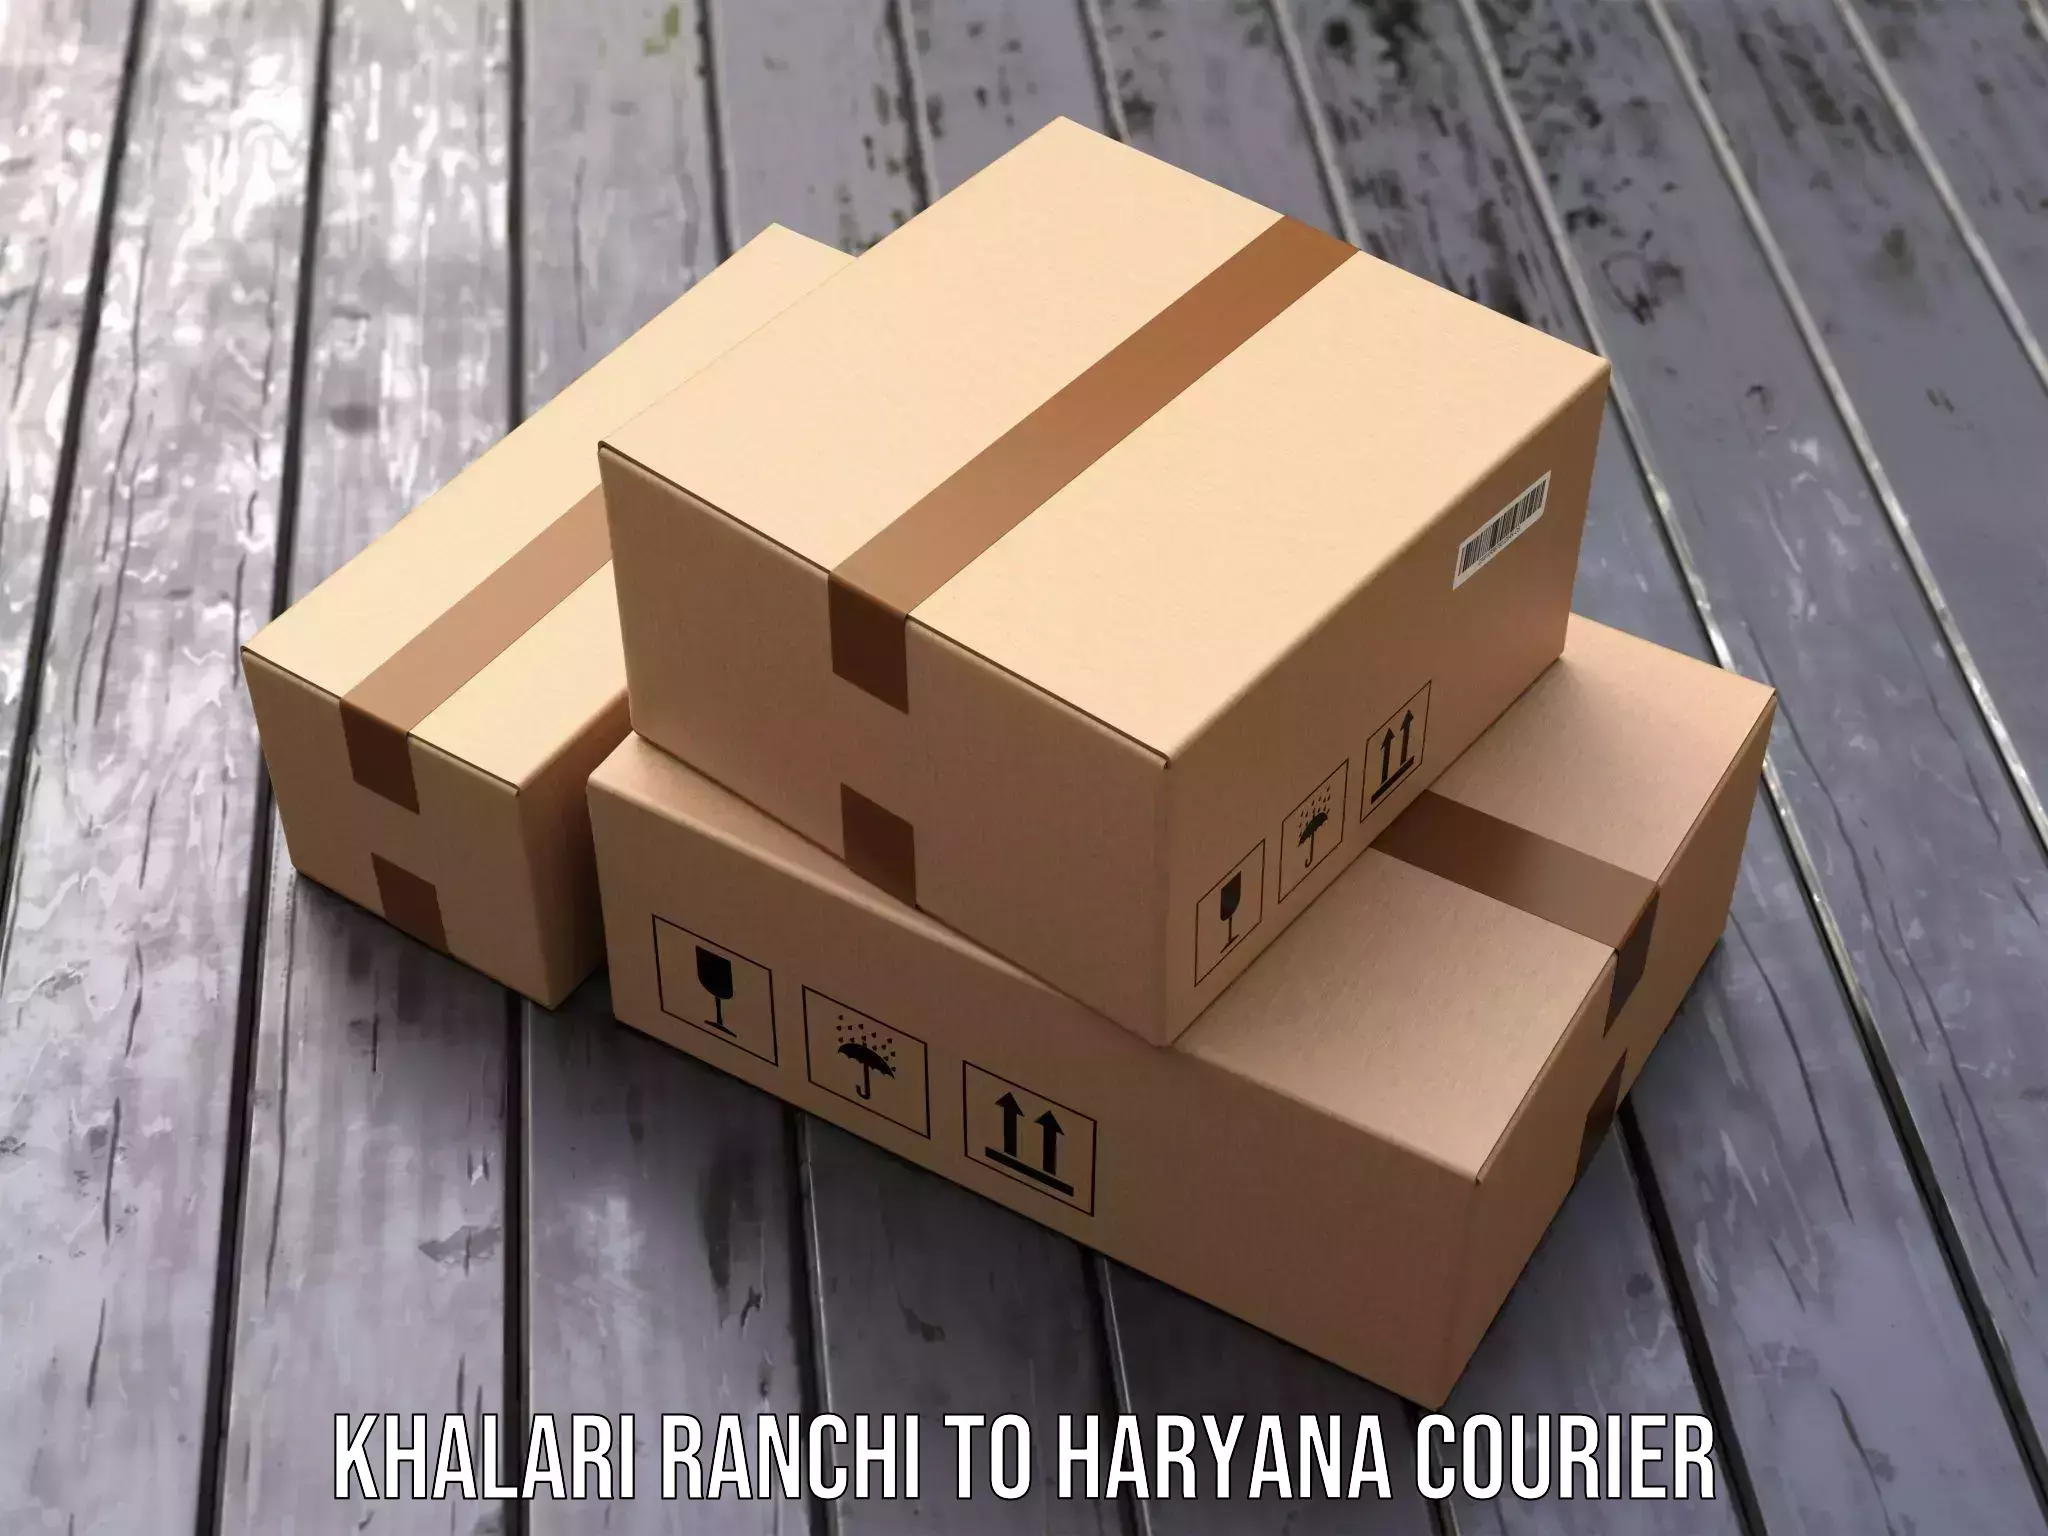 Courier service innovation Khalari Ranchi to Hodal